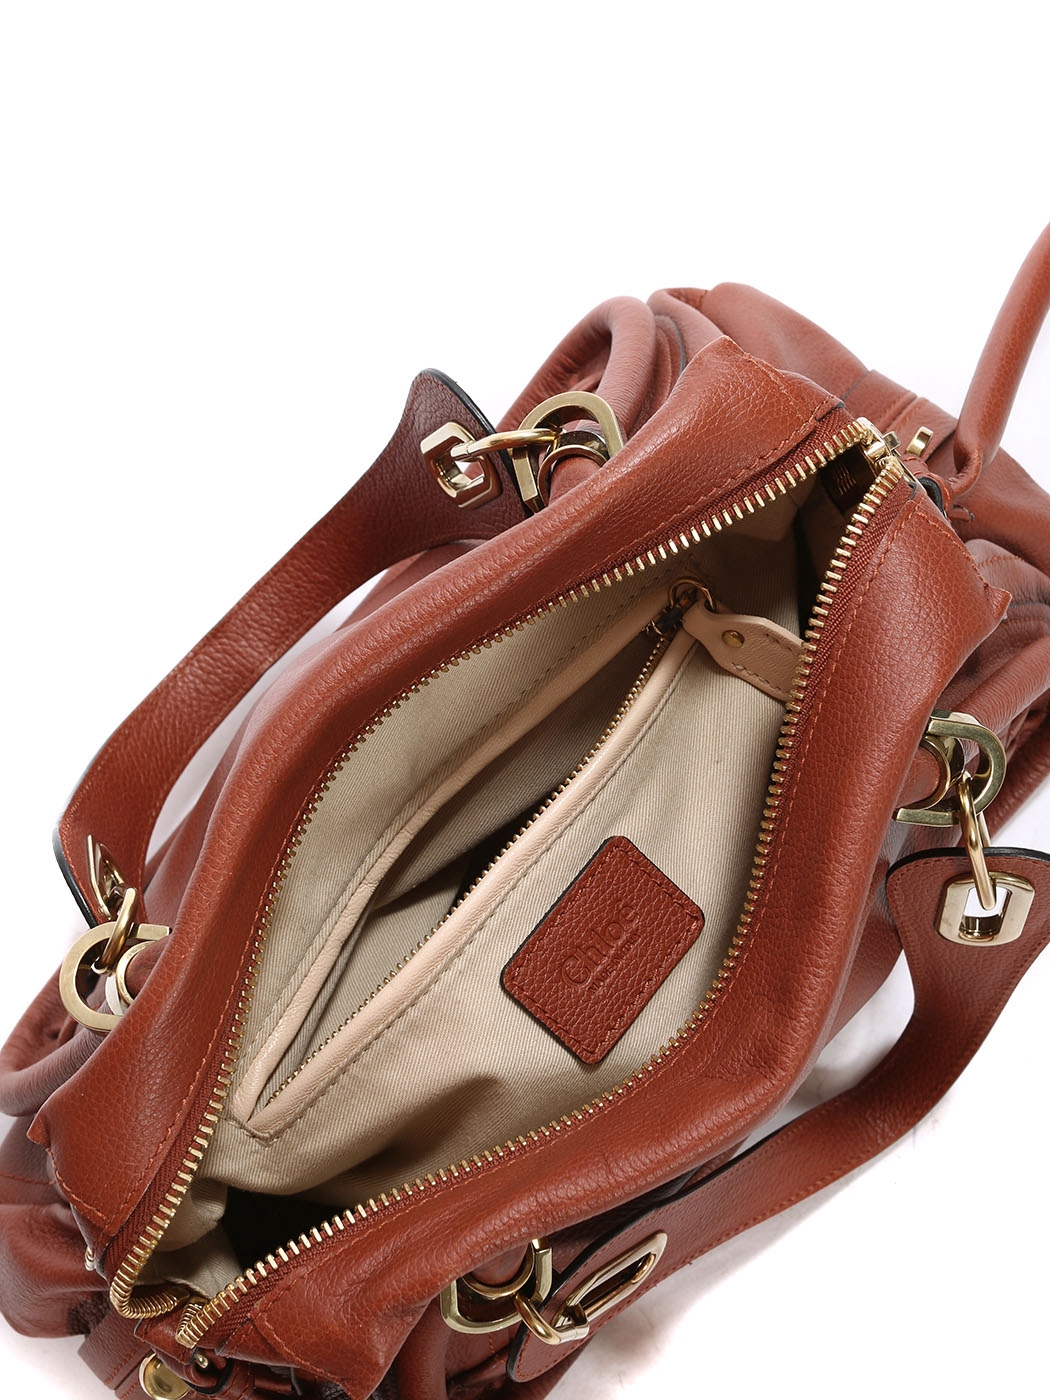 Louise Paris - CHLOE Cognac tan brown grained leather Paraty medium leather cross body bag ...